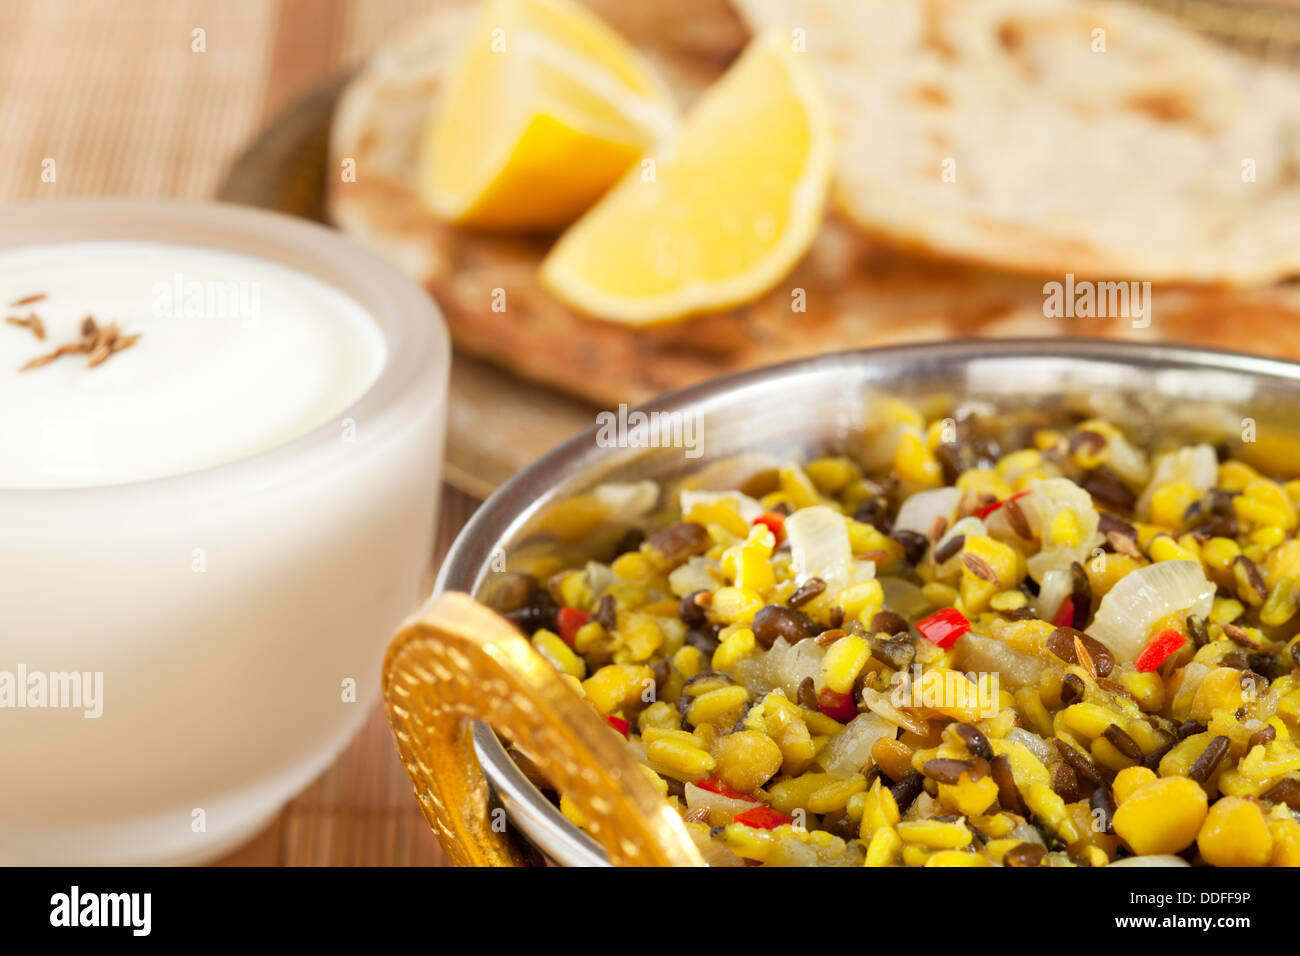 Dhal indiana cibo vegetariano - una ciotola di dhal indiana o dal fatto da channa dhal e urid dhal, con pane naan e yogurt. Foto Stock